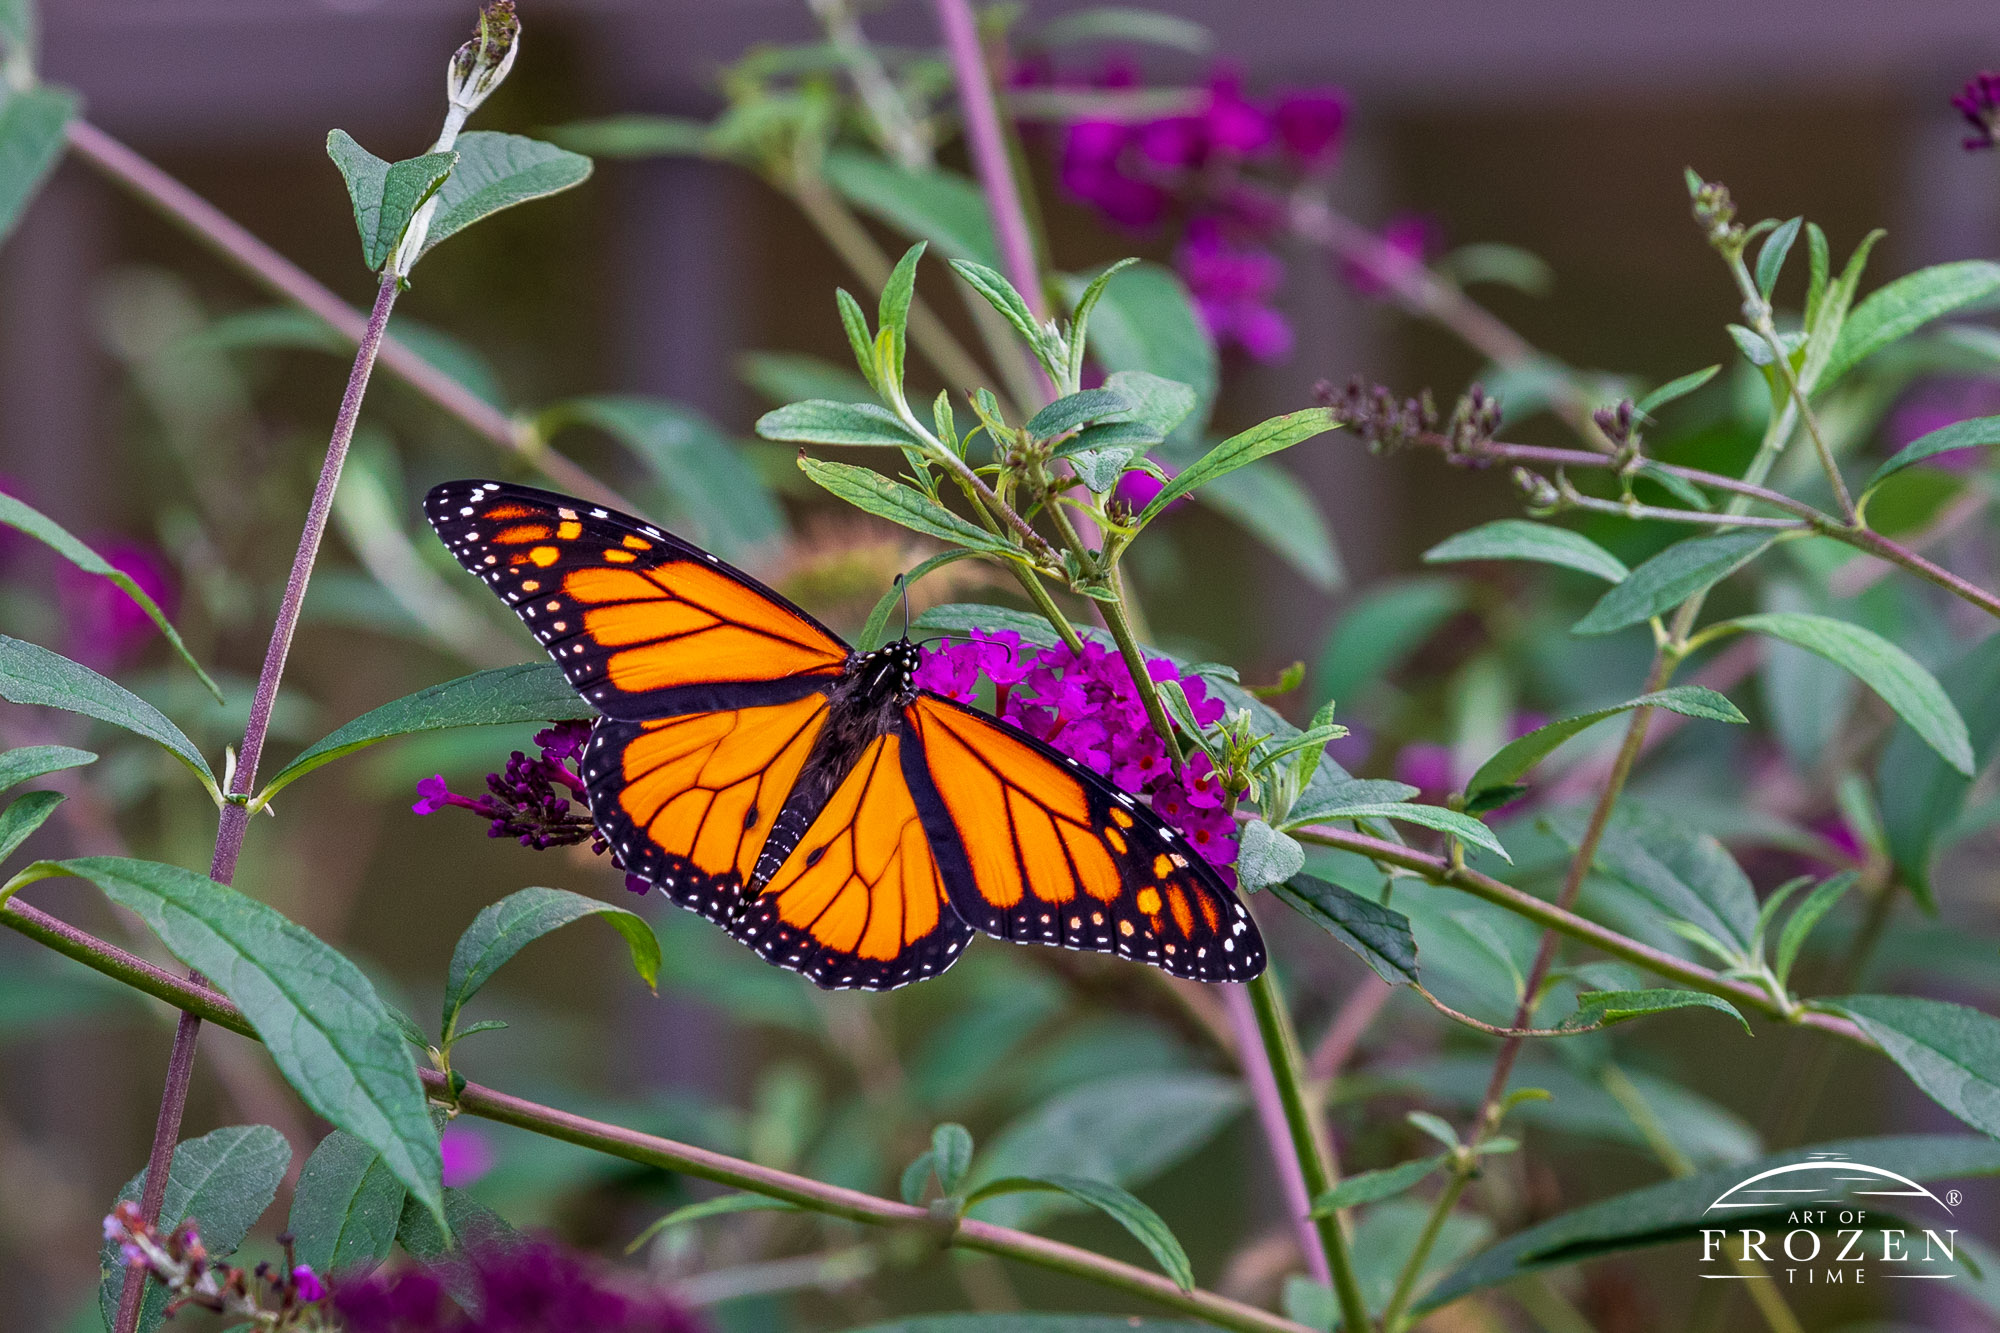 A close up image of Monarch Butterfly (Danaus plexippus) on Black Knight Butterfly Bush (Buddleja davidii)